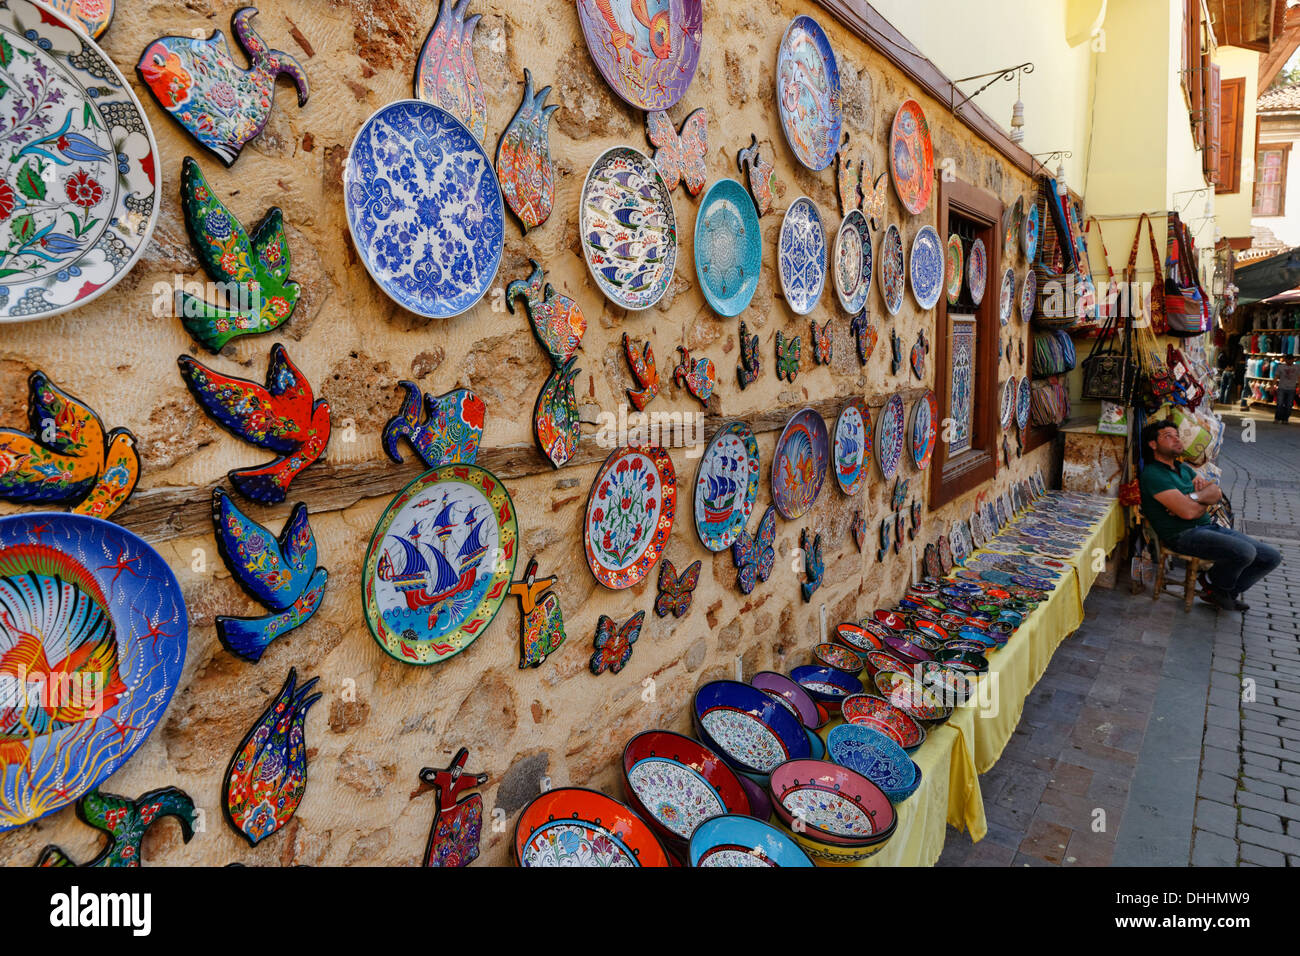 Piastre in ceramica come souvenir, Kaleiçi, Antalya, Provincia di Antalya, Turchia Foto Stock